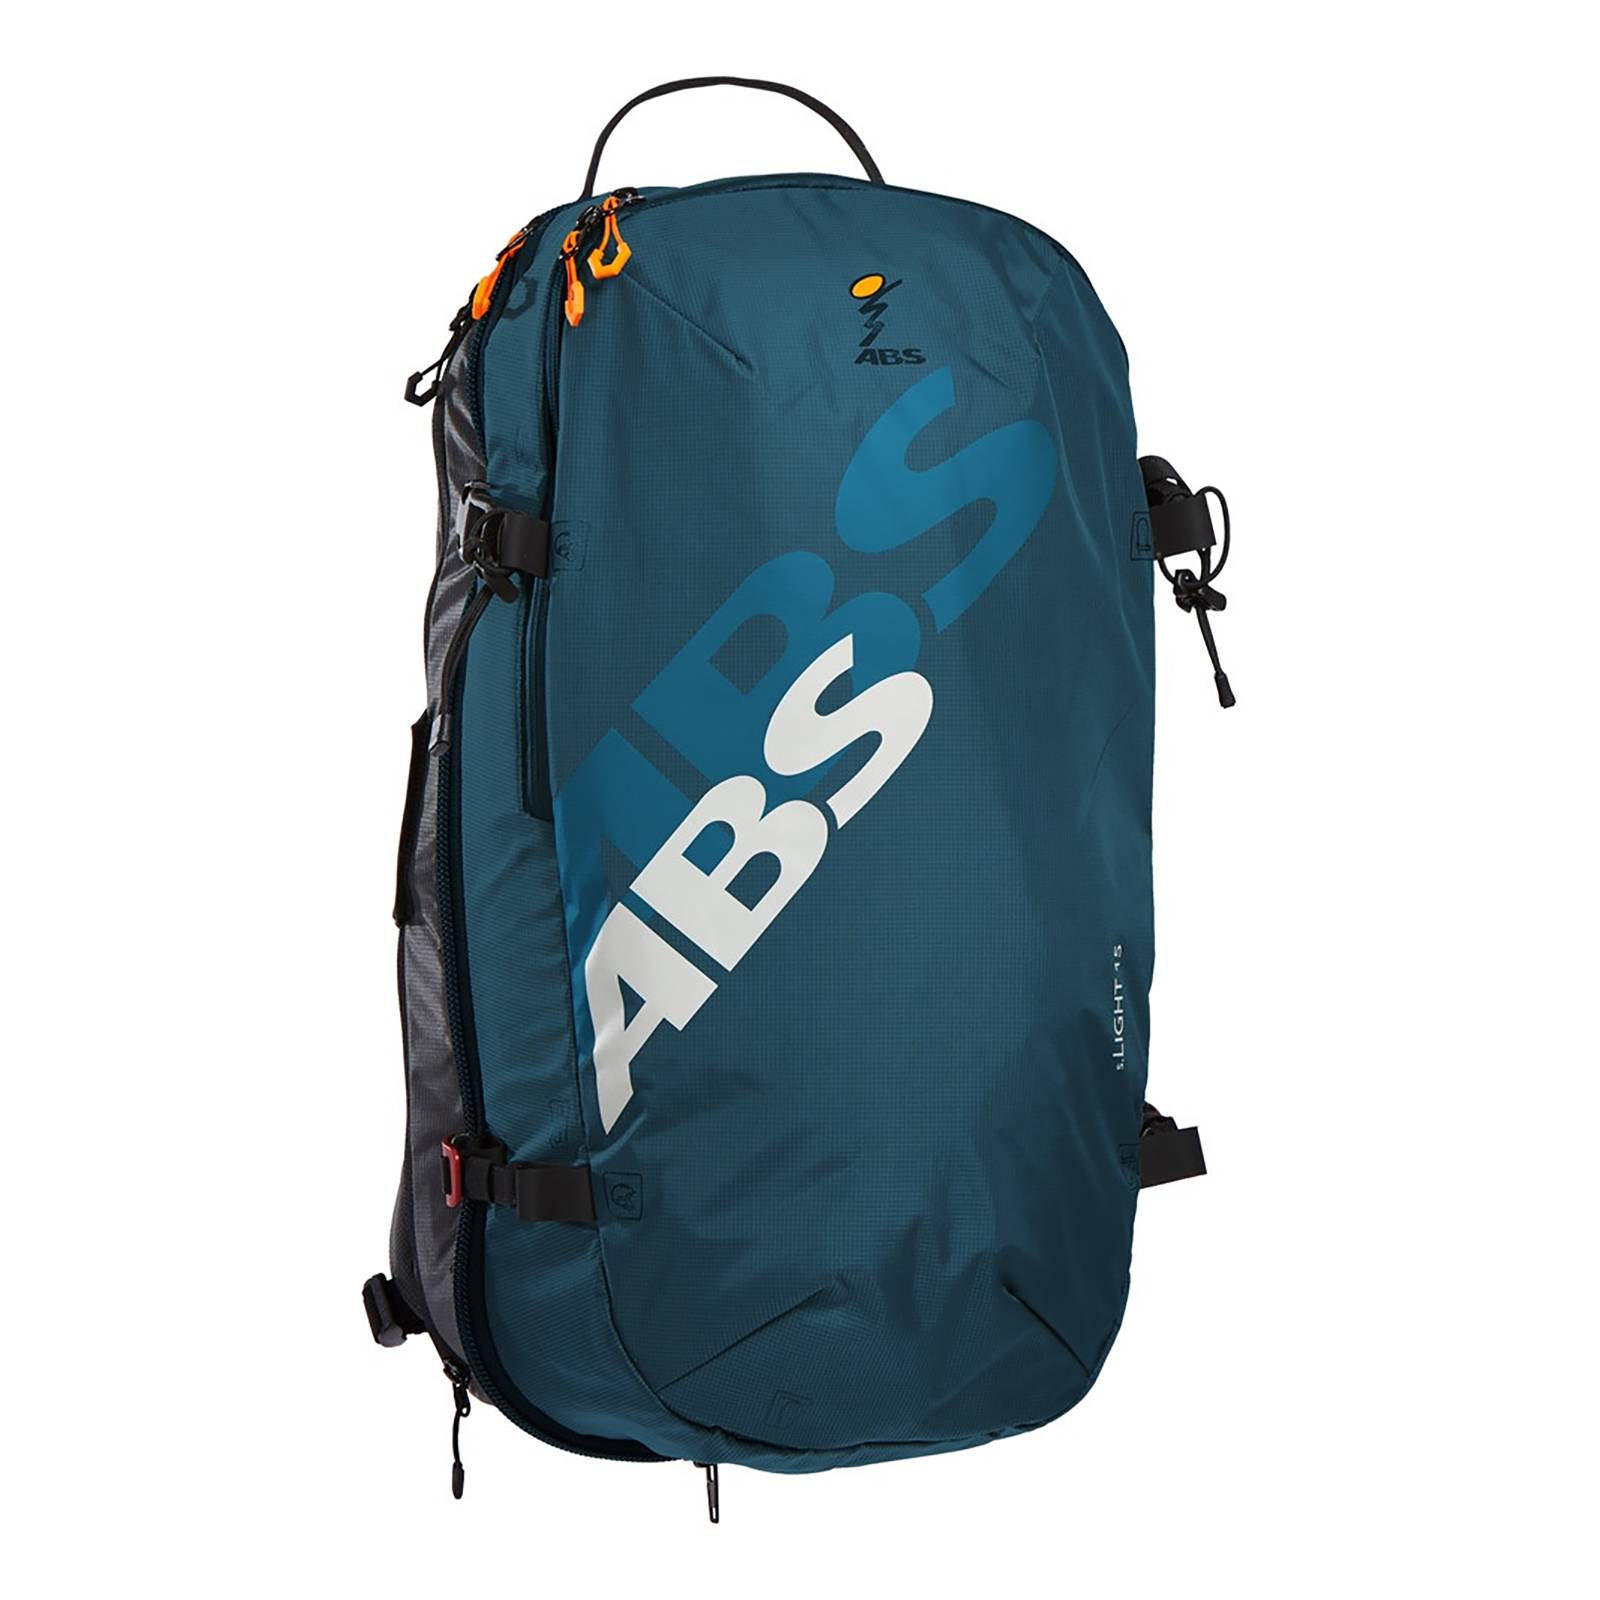 ABS s.LIGHT compact Zip-On 15 blau